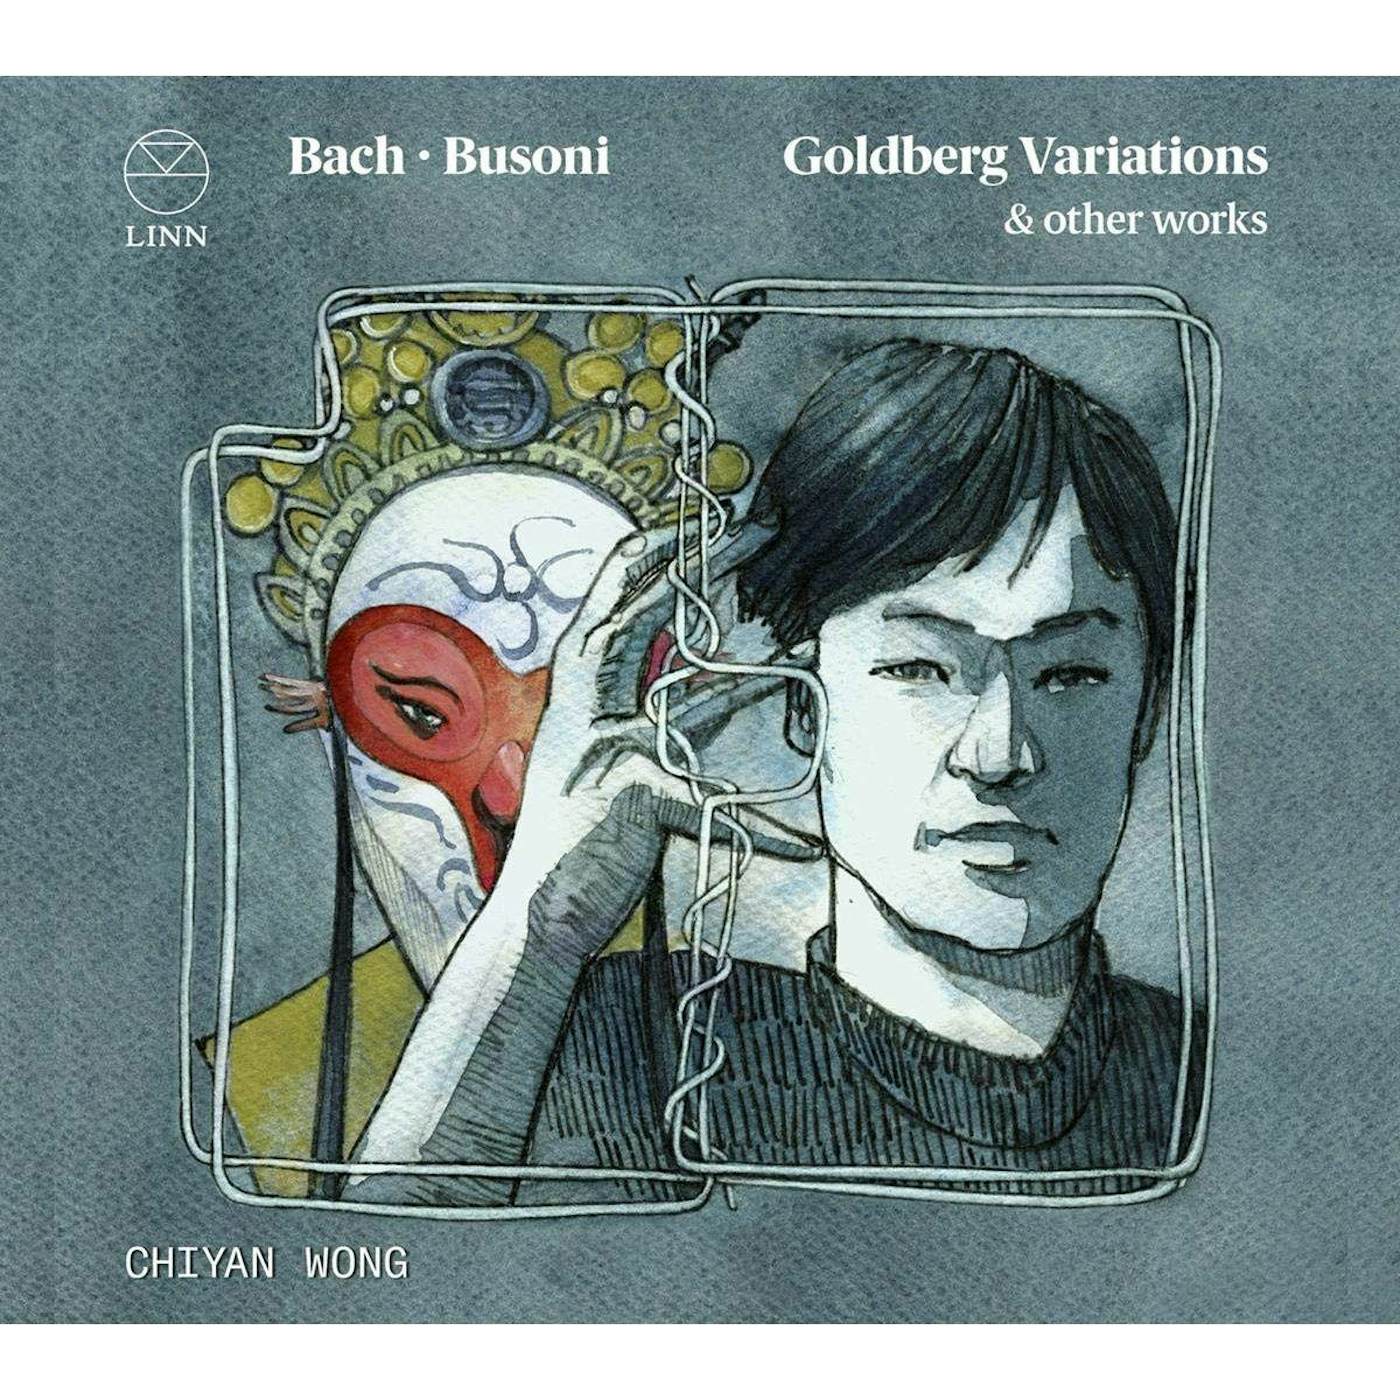 BUSONI / WONG GOLDBERG VARIATIONS CD